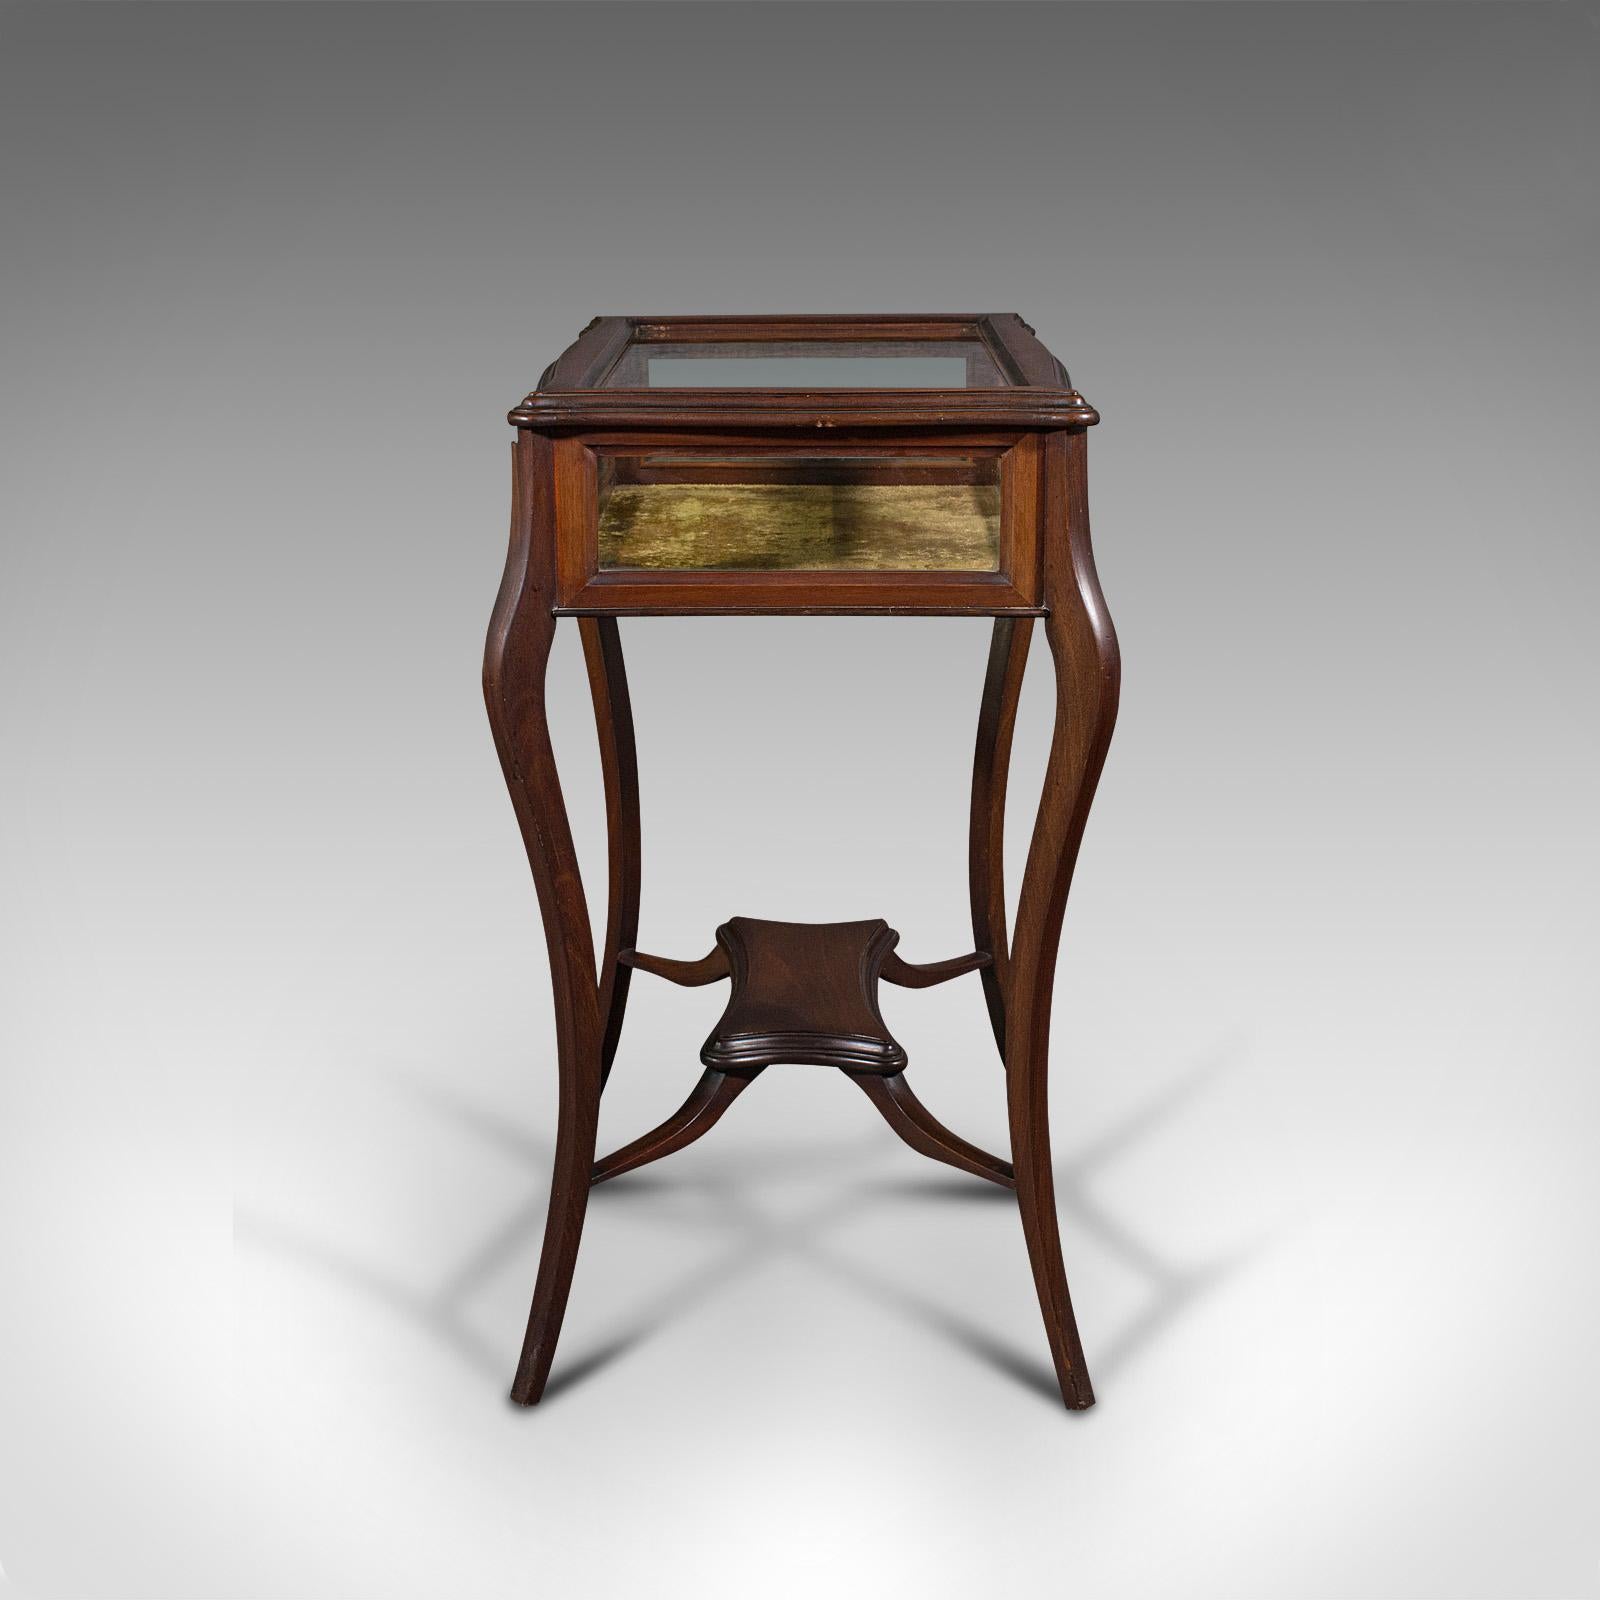 British Antique Bijouterie Table, English, Display Case, Showcase, Stand, Edwardian